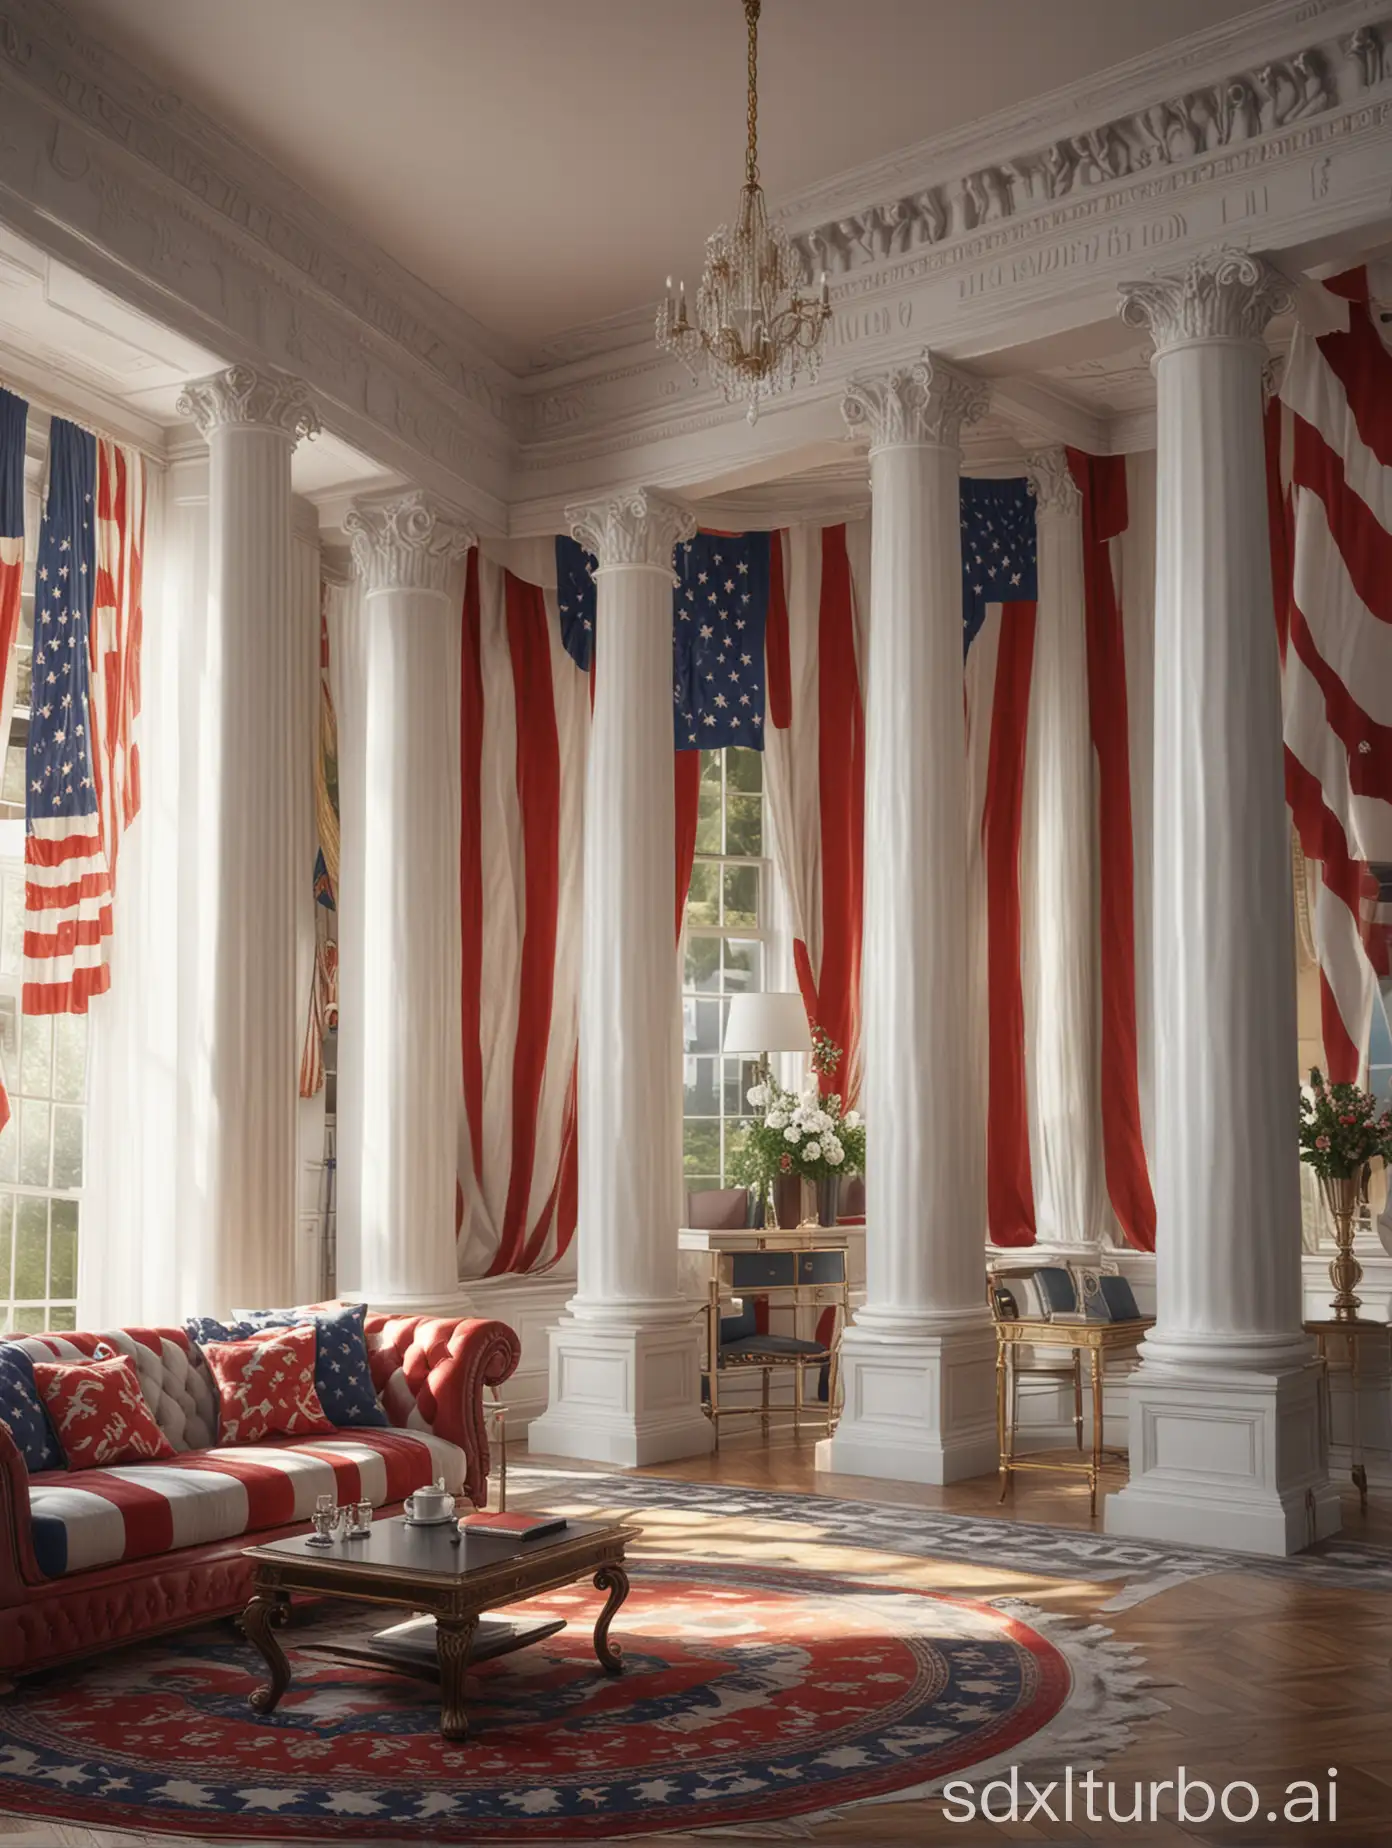 Whitehouse Wallpaper, Photorealistic, 8k, epic, animation, patriotic, glamourous, vibrant